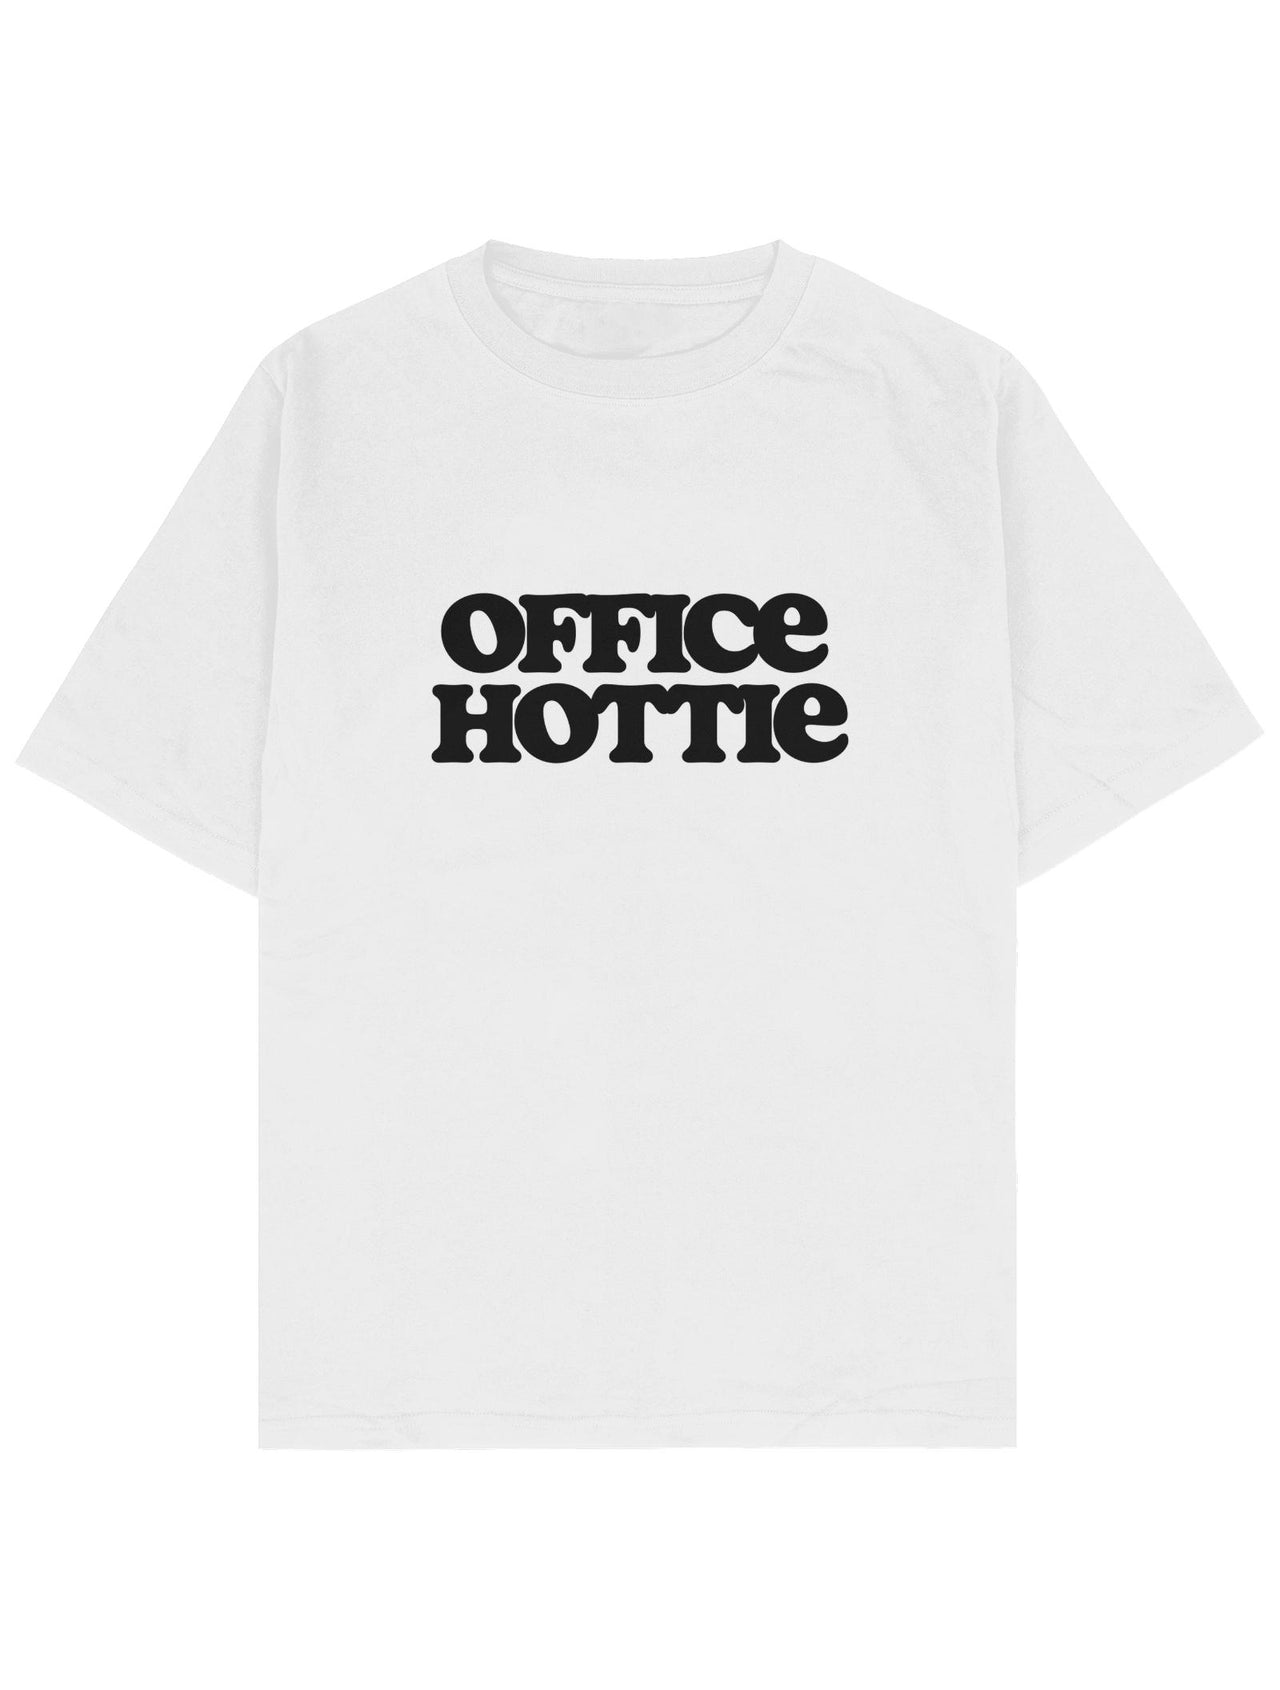 Office Hottie Oversize Tee